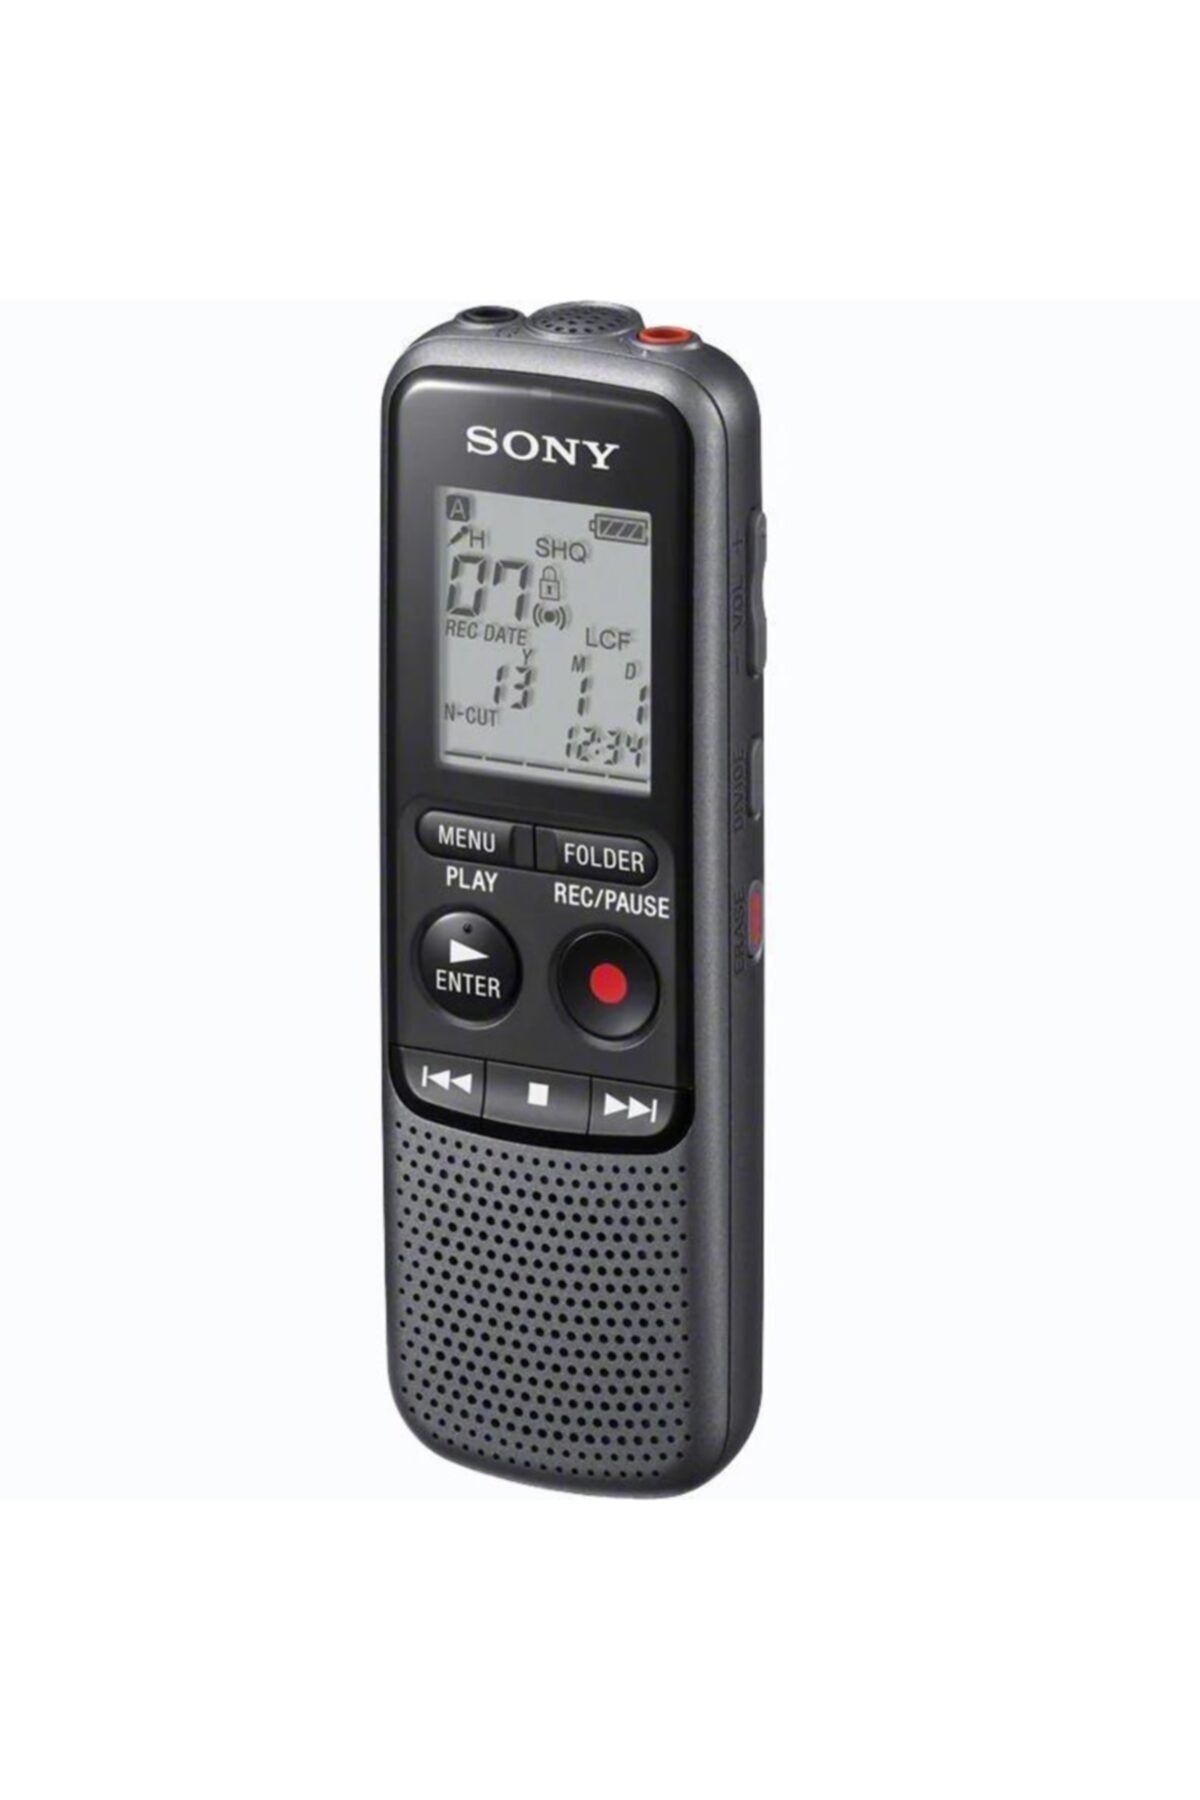 Sony Icd-px240 4gb Ses Kayıt Cihazı